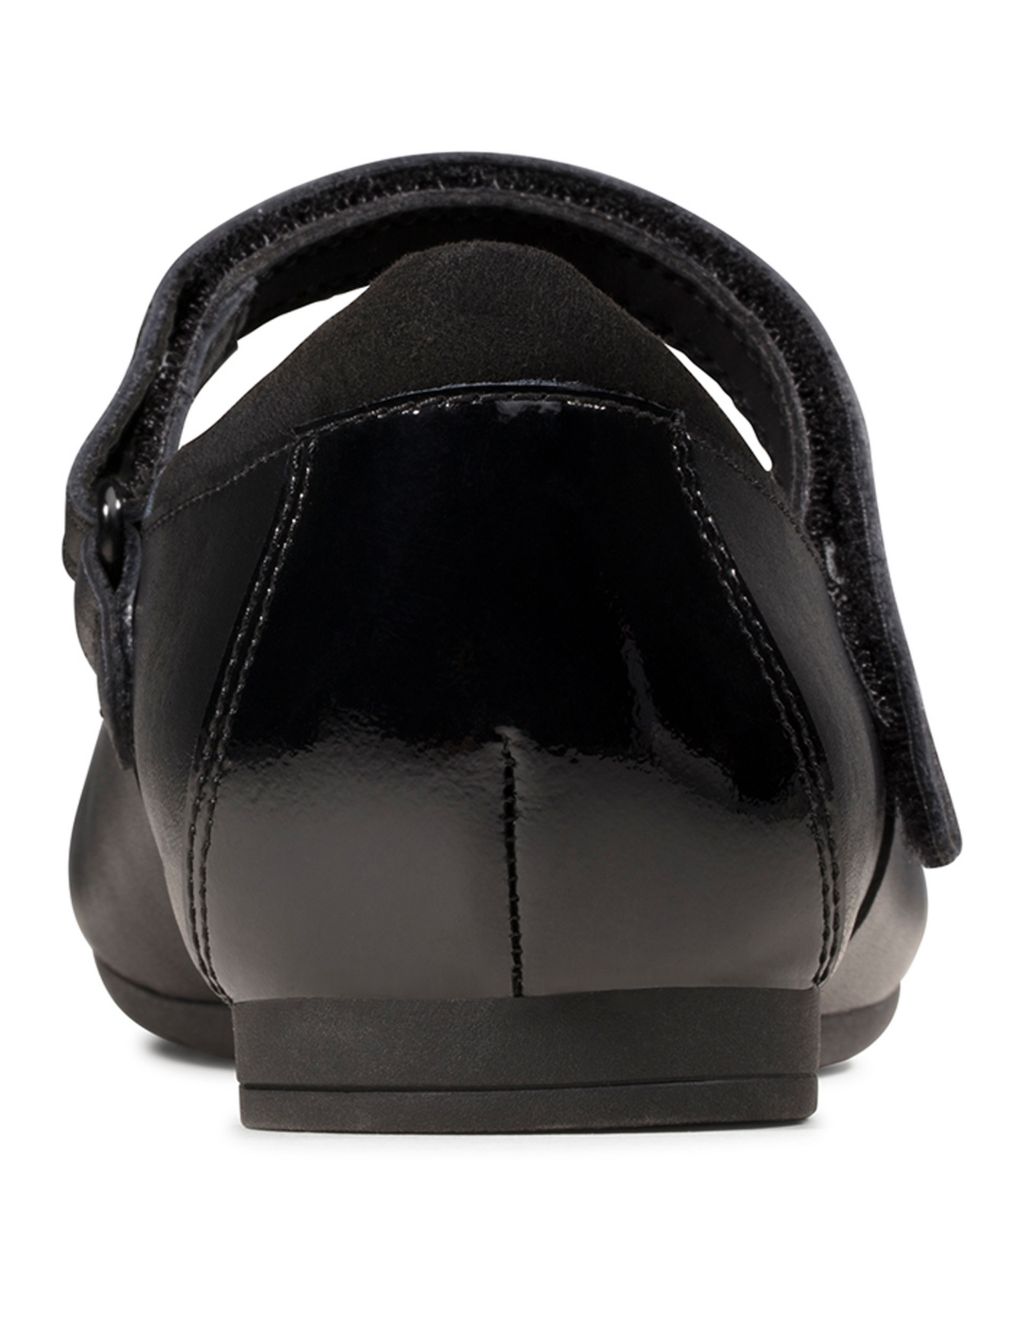 Kids' Leather Mary Jane Shoes (Youth size 3-8) image 2